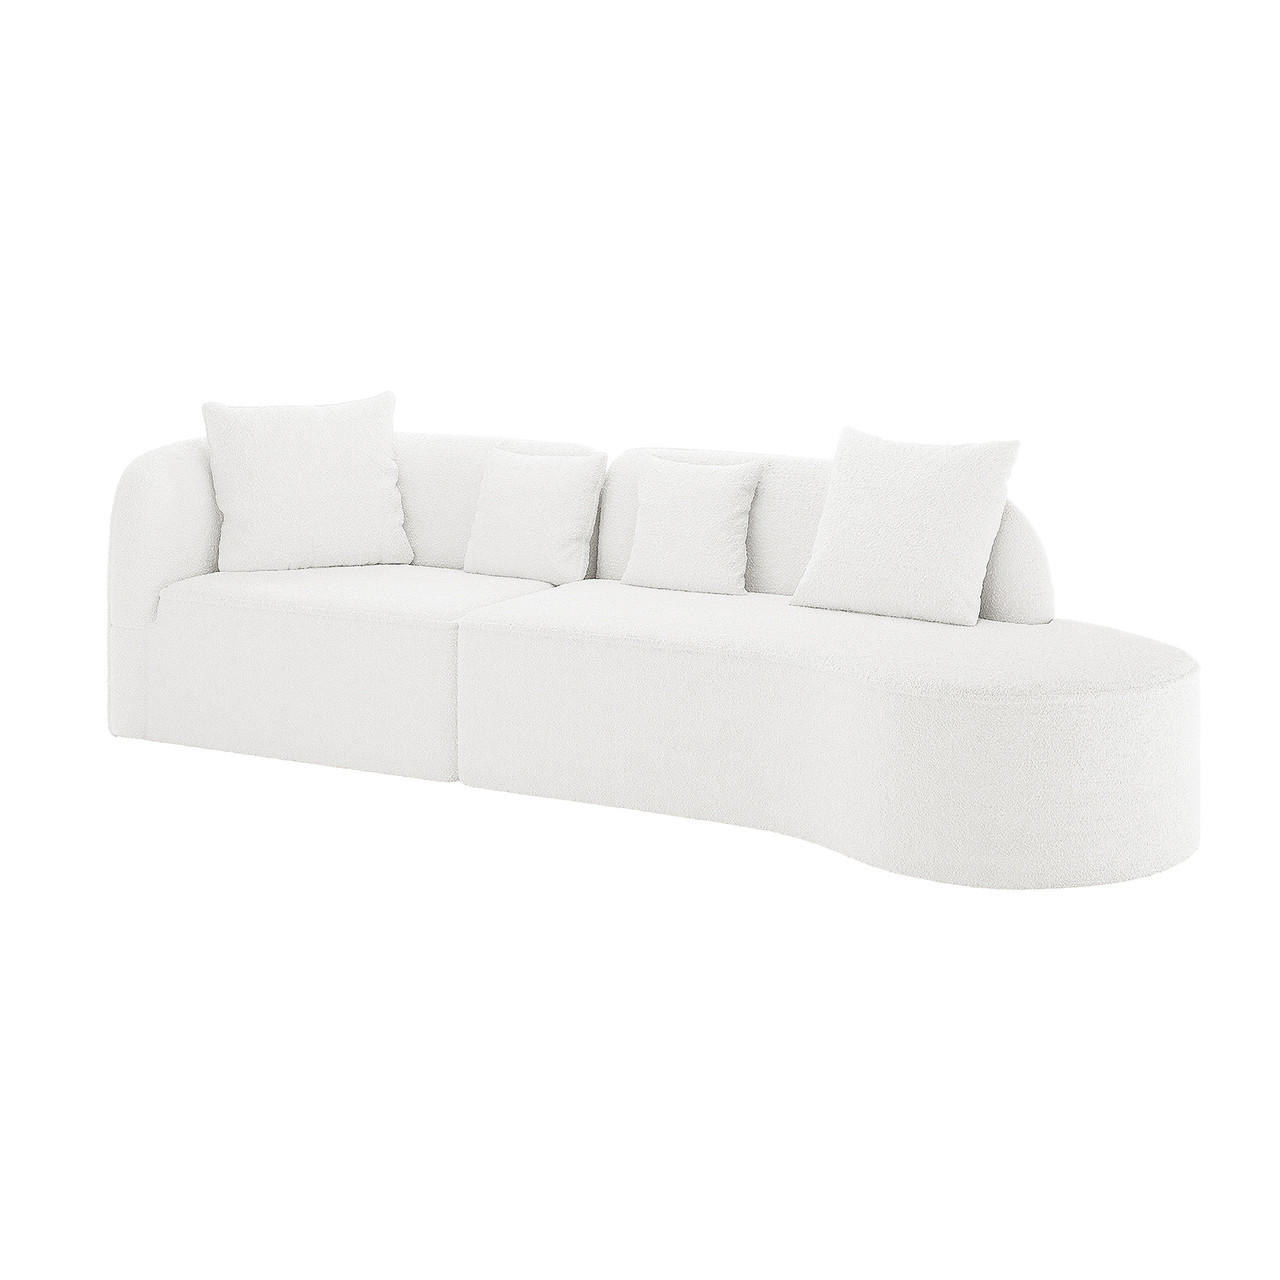 Hattie 4 Seater Boucle Sofa - Cream White